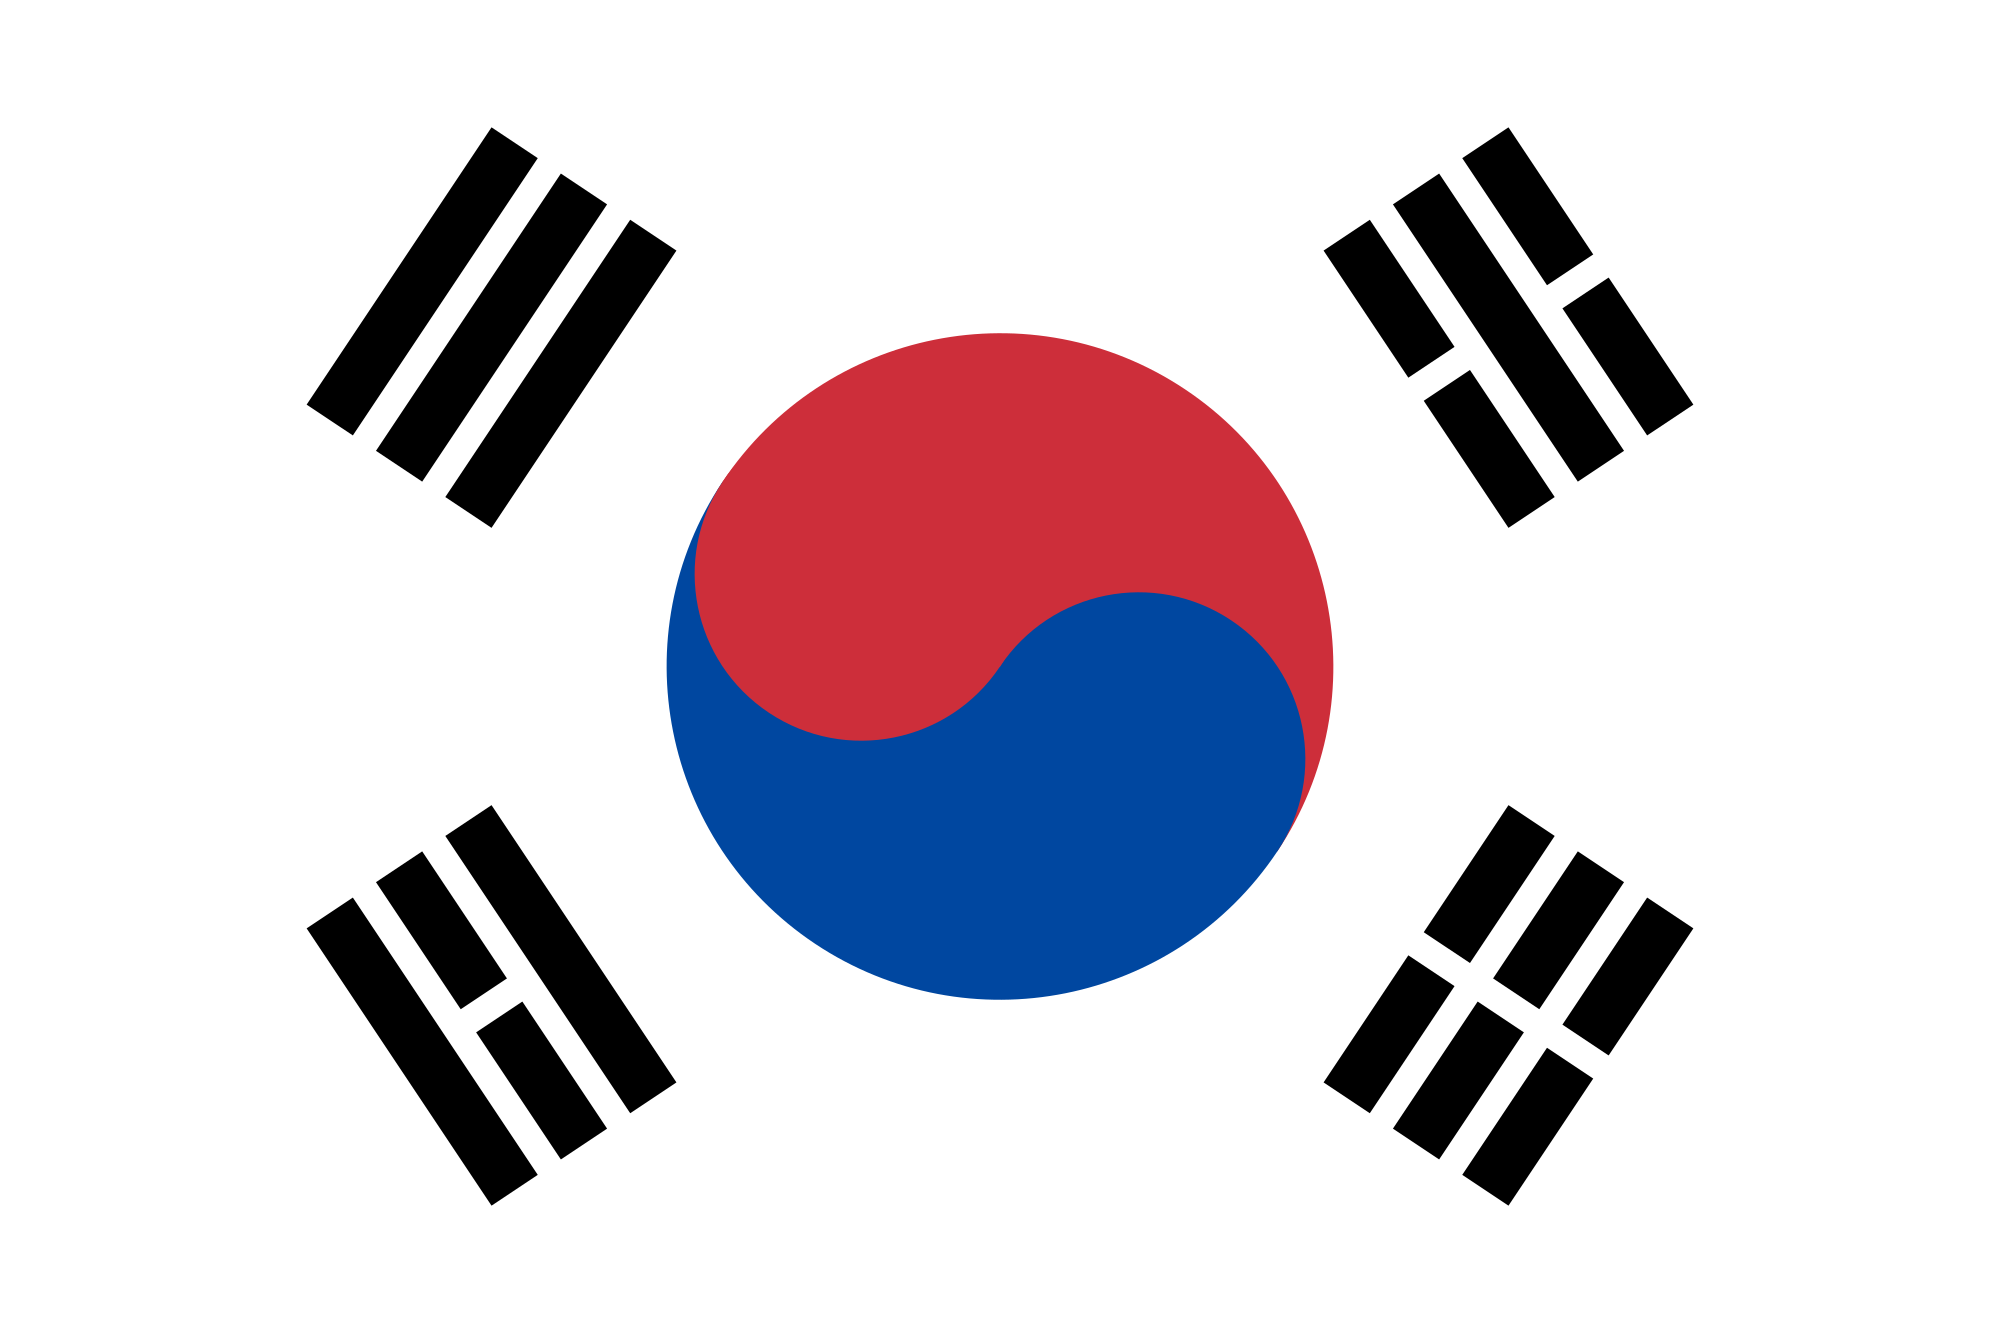 The Korean flag